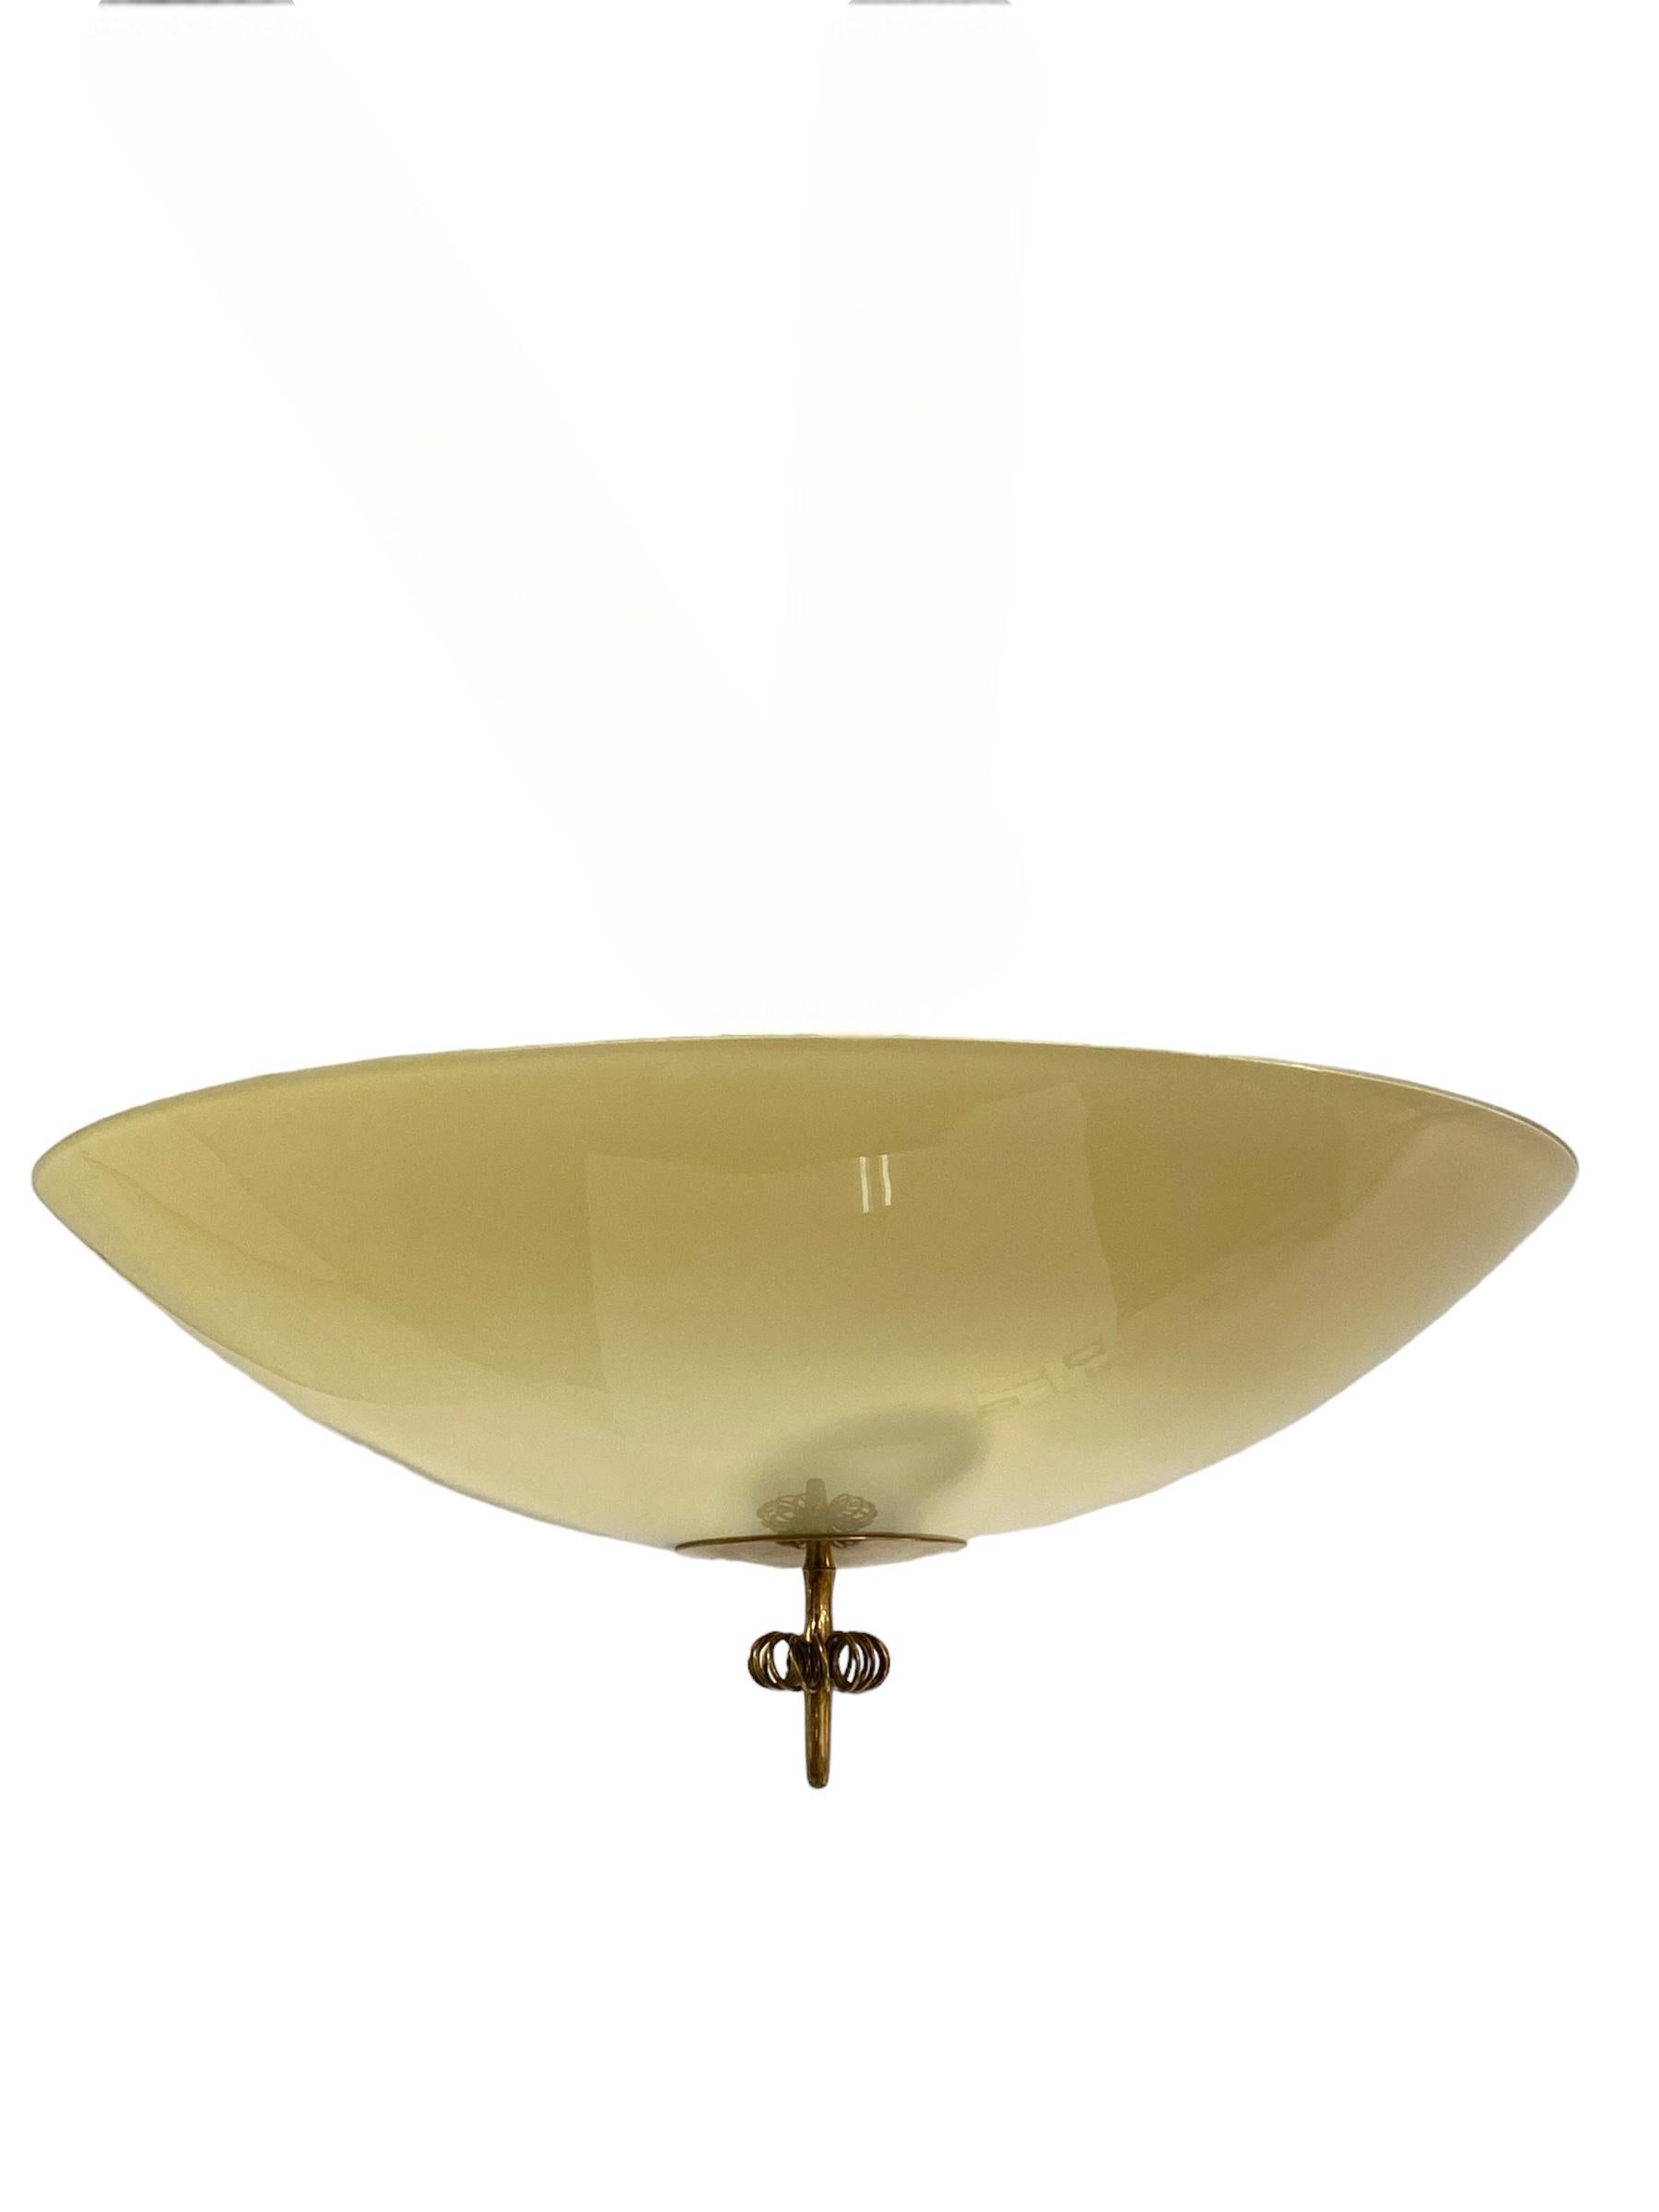 Scandinavian Modern Paavo Tynell Ceiling Lamp/Flush Mount  Model Number 1088 For Idman, 1950s For Sale